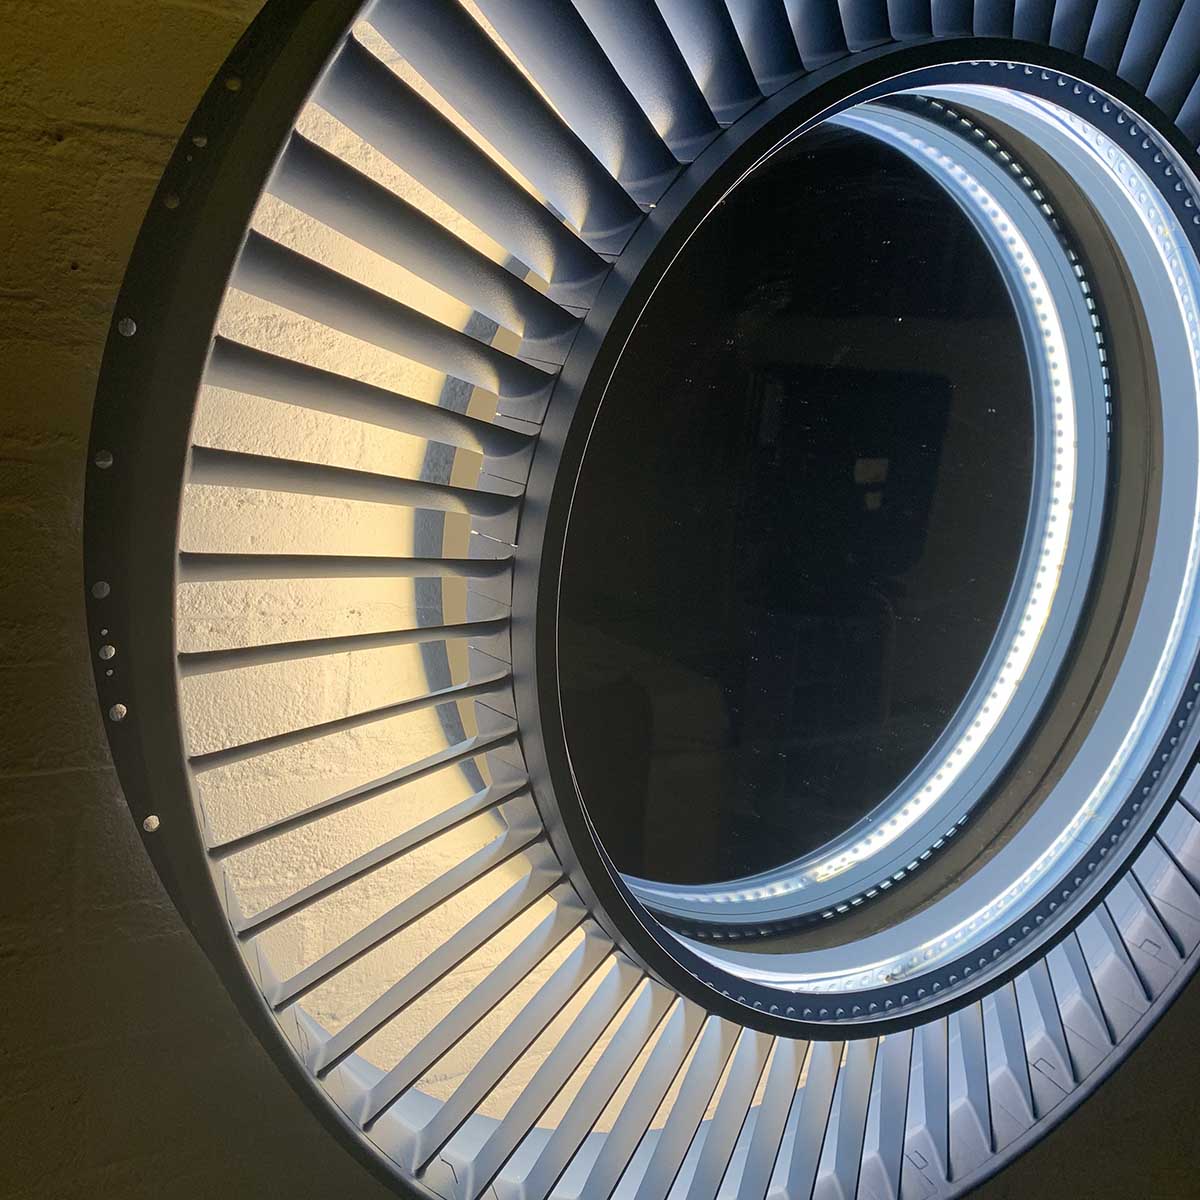 Photo showing the LED lights on a Pratt & Whitney jet engine stator mirror.